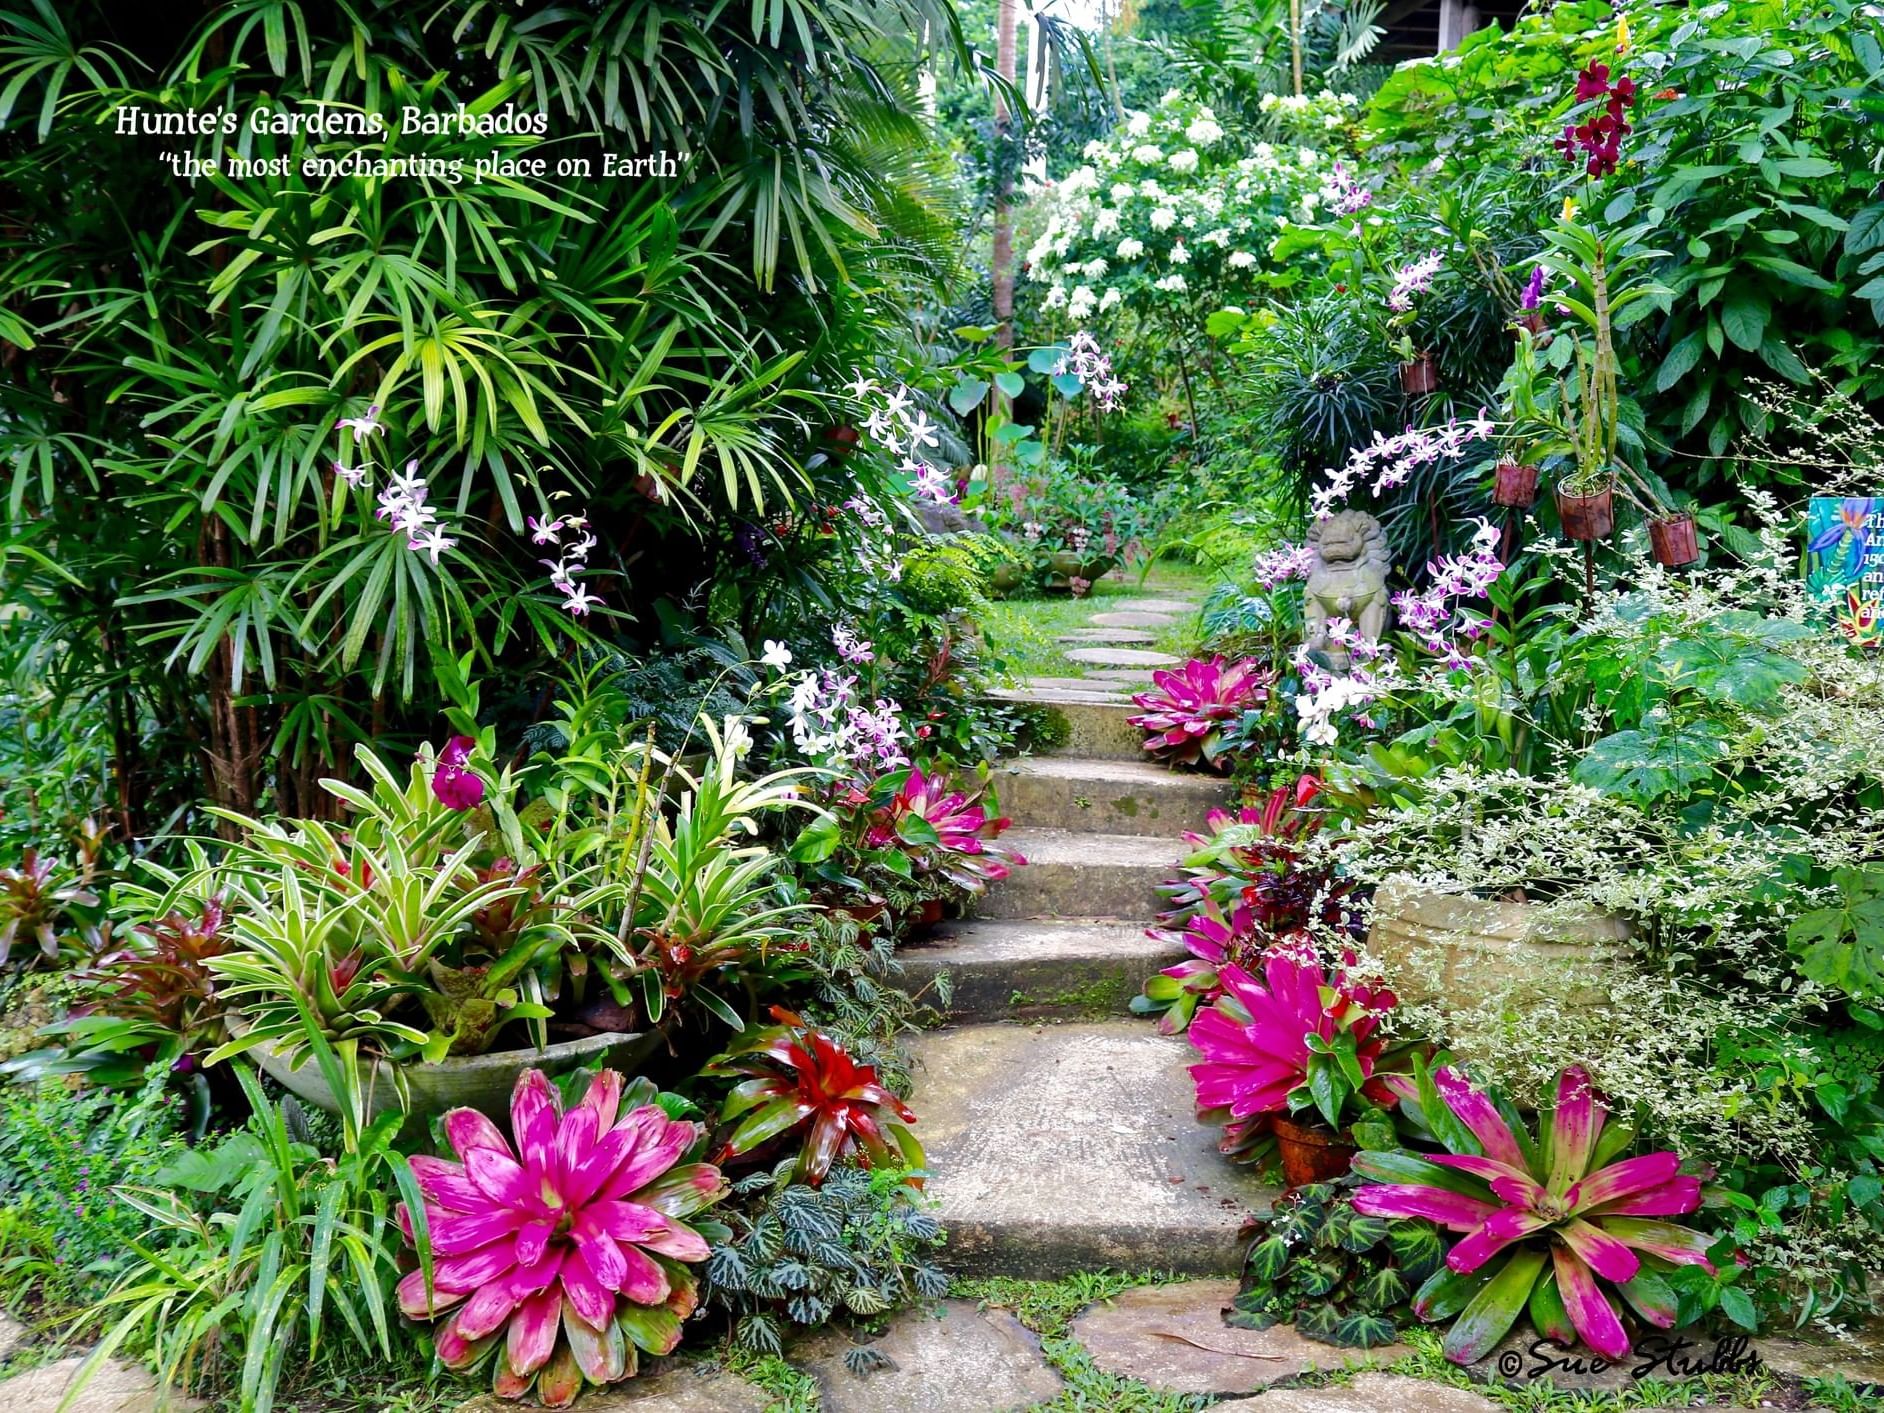 A footpath in the Hunte’s Gardens near Sugar Bay Barbados